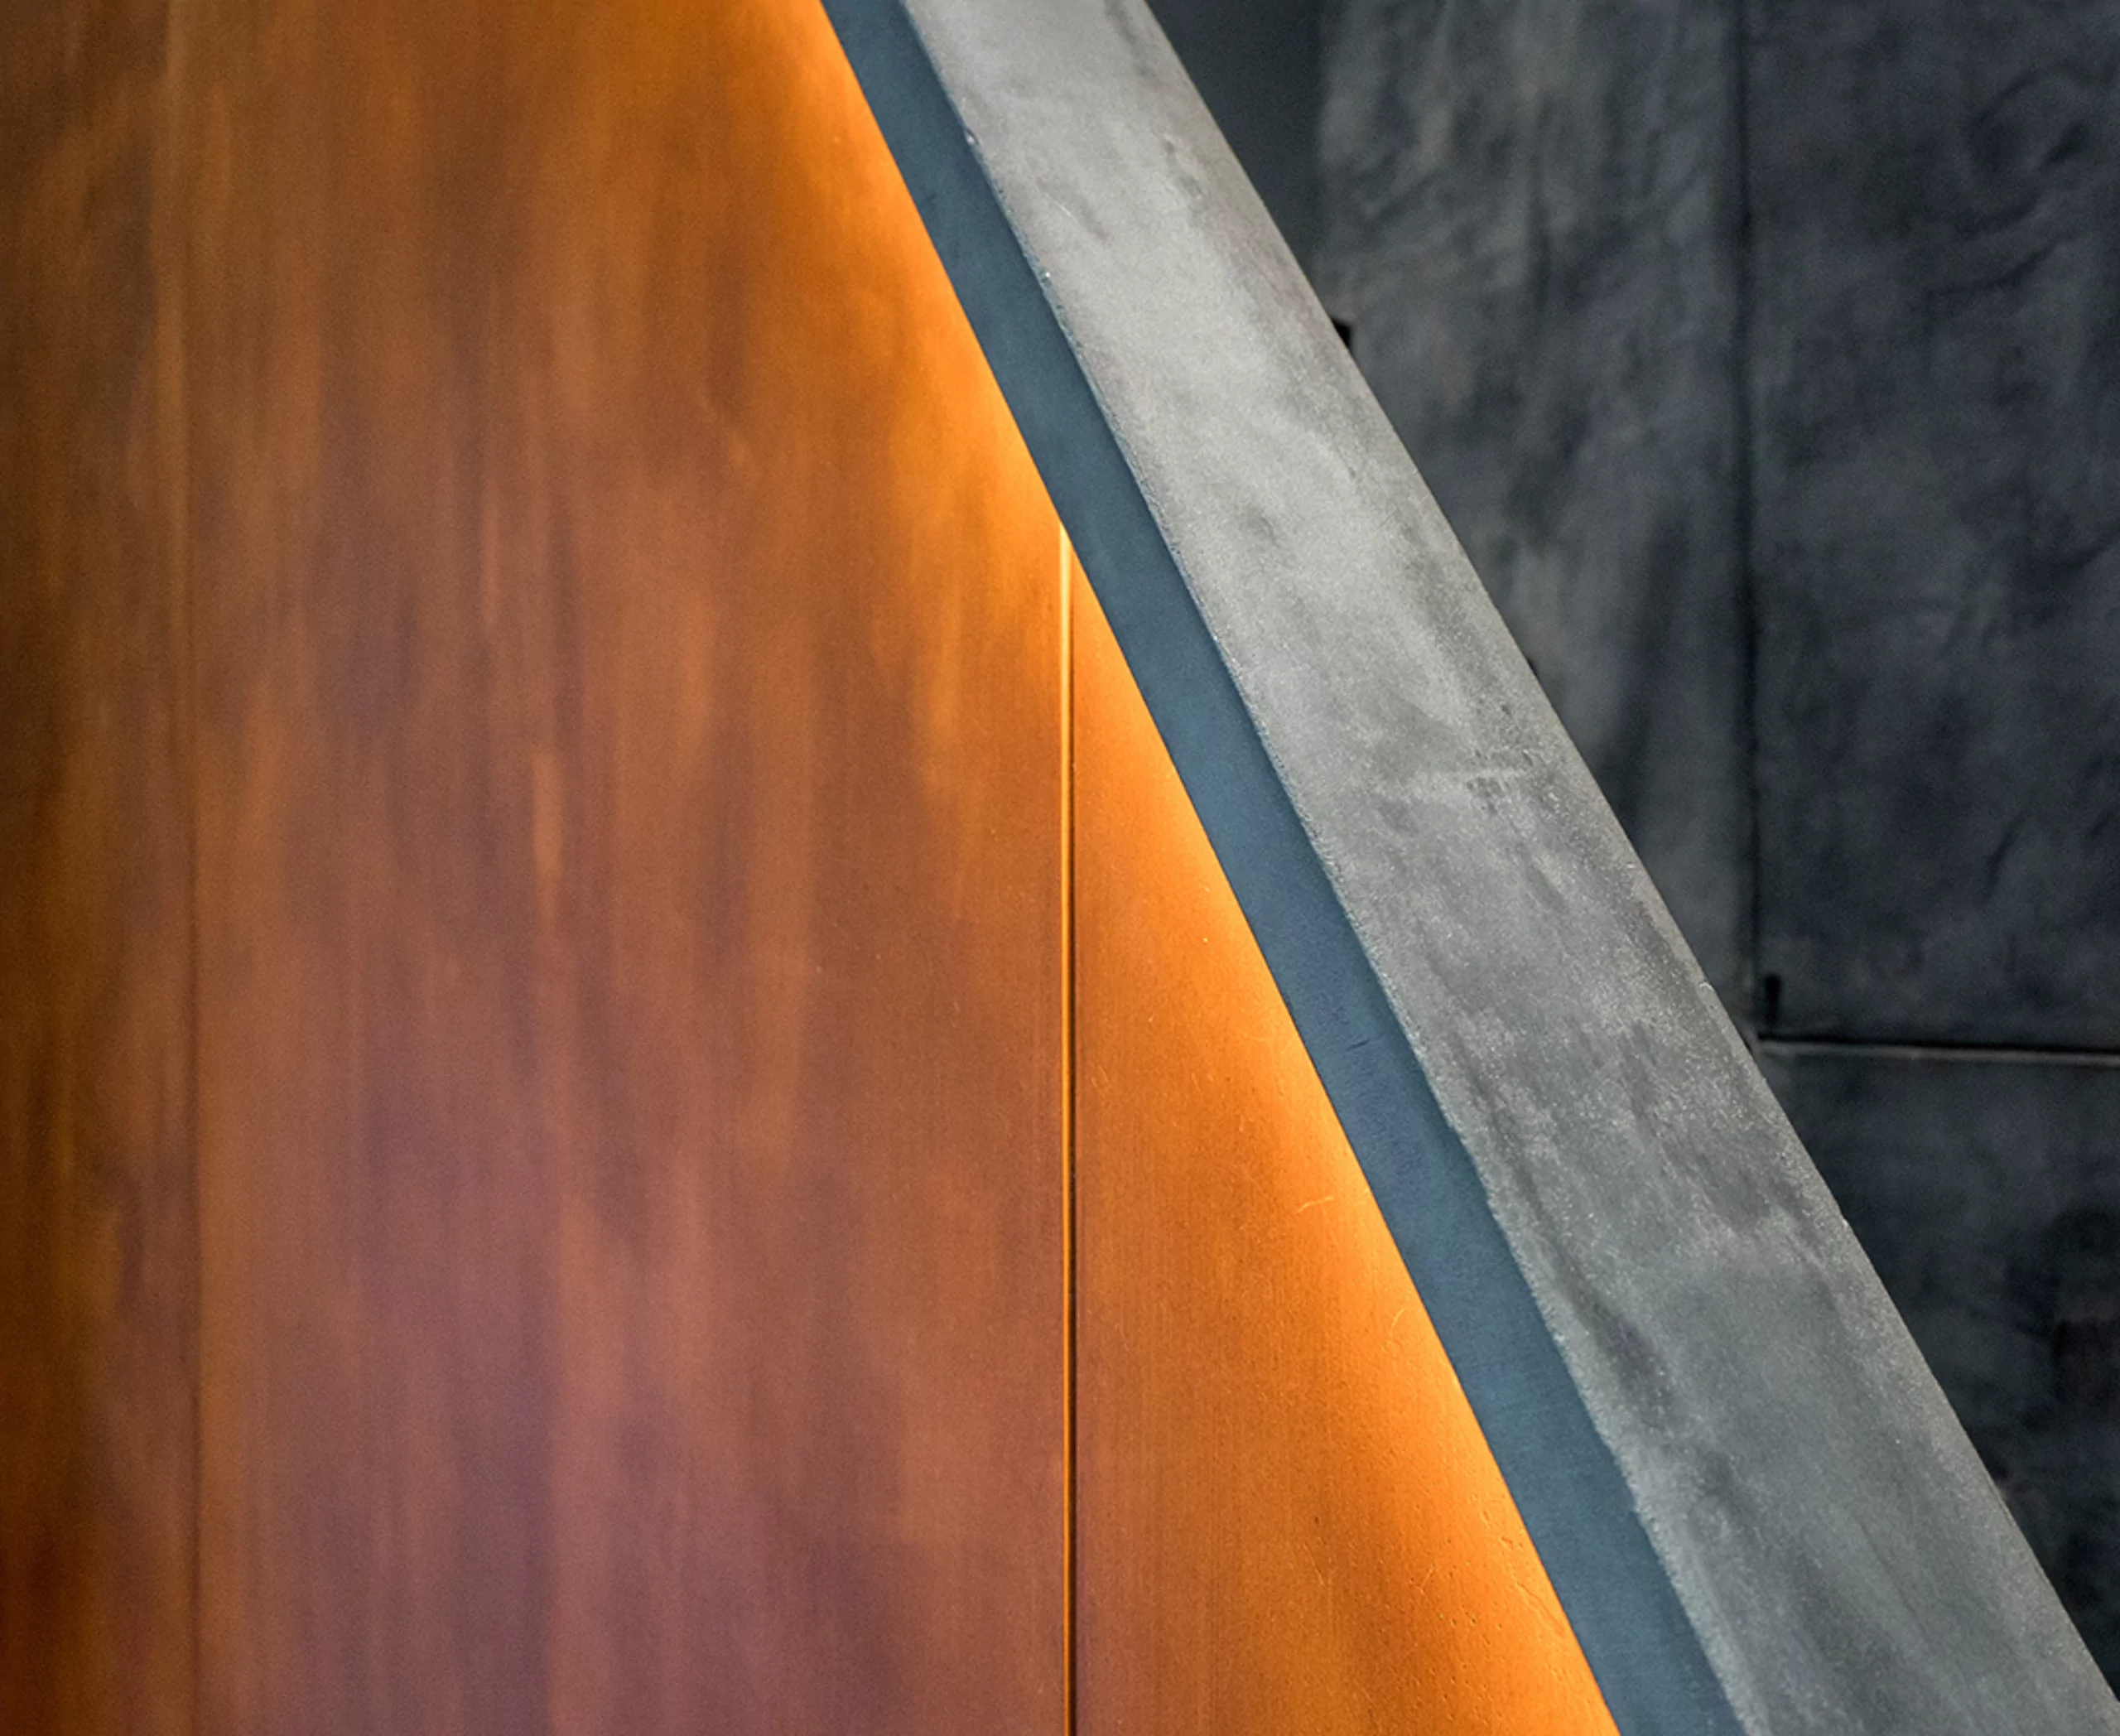 Staircase wall designed using corten steel finish and decorative concrete finish